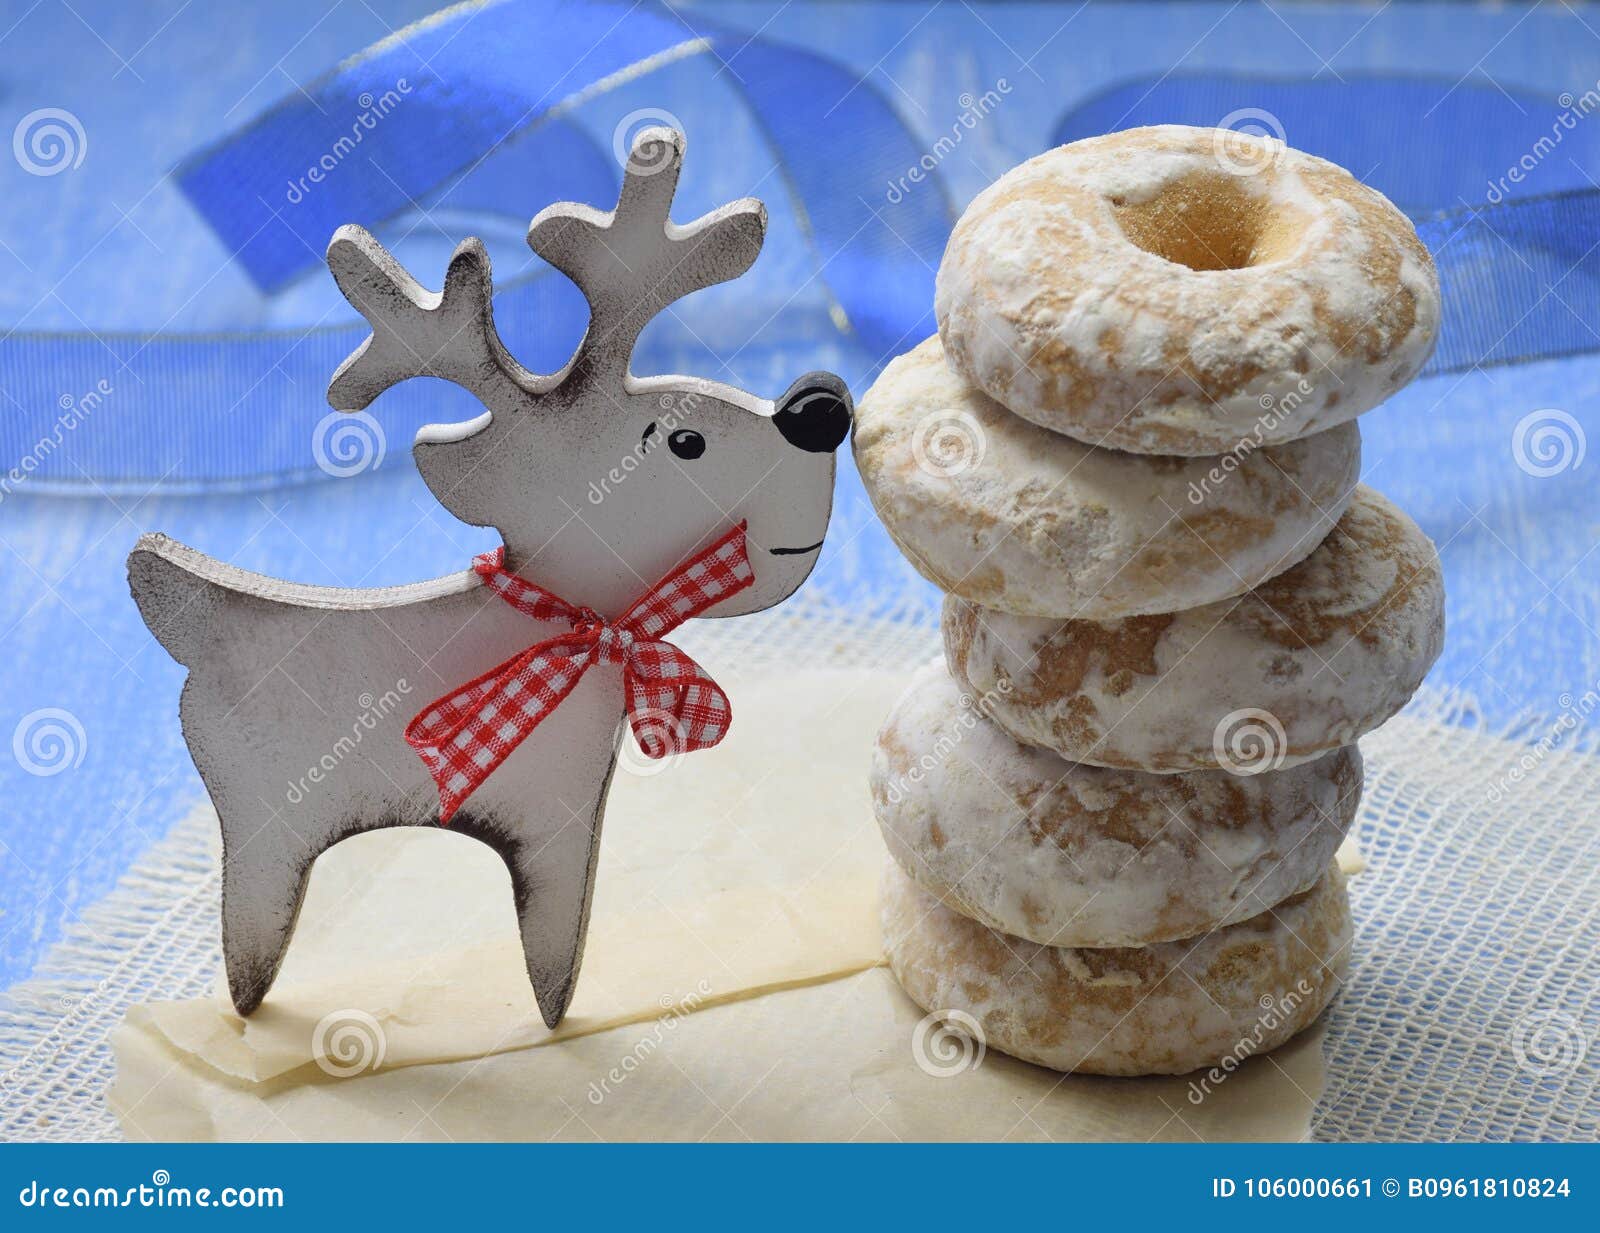 Funny Wooden deer sniffing the handmade Christmas cakes Joke Christmas New Year Homemade baking Holiday humor